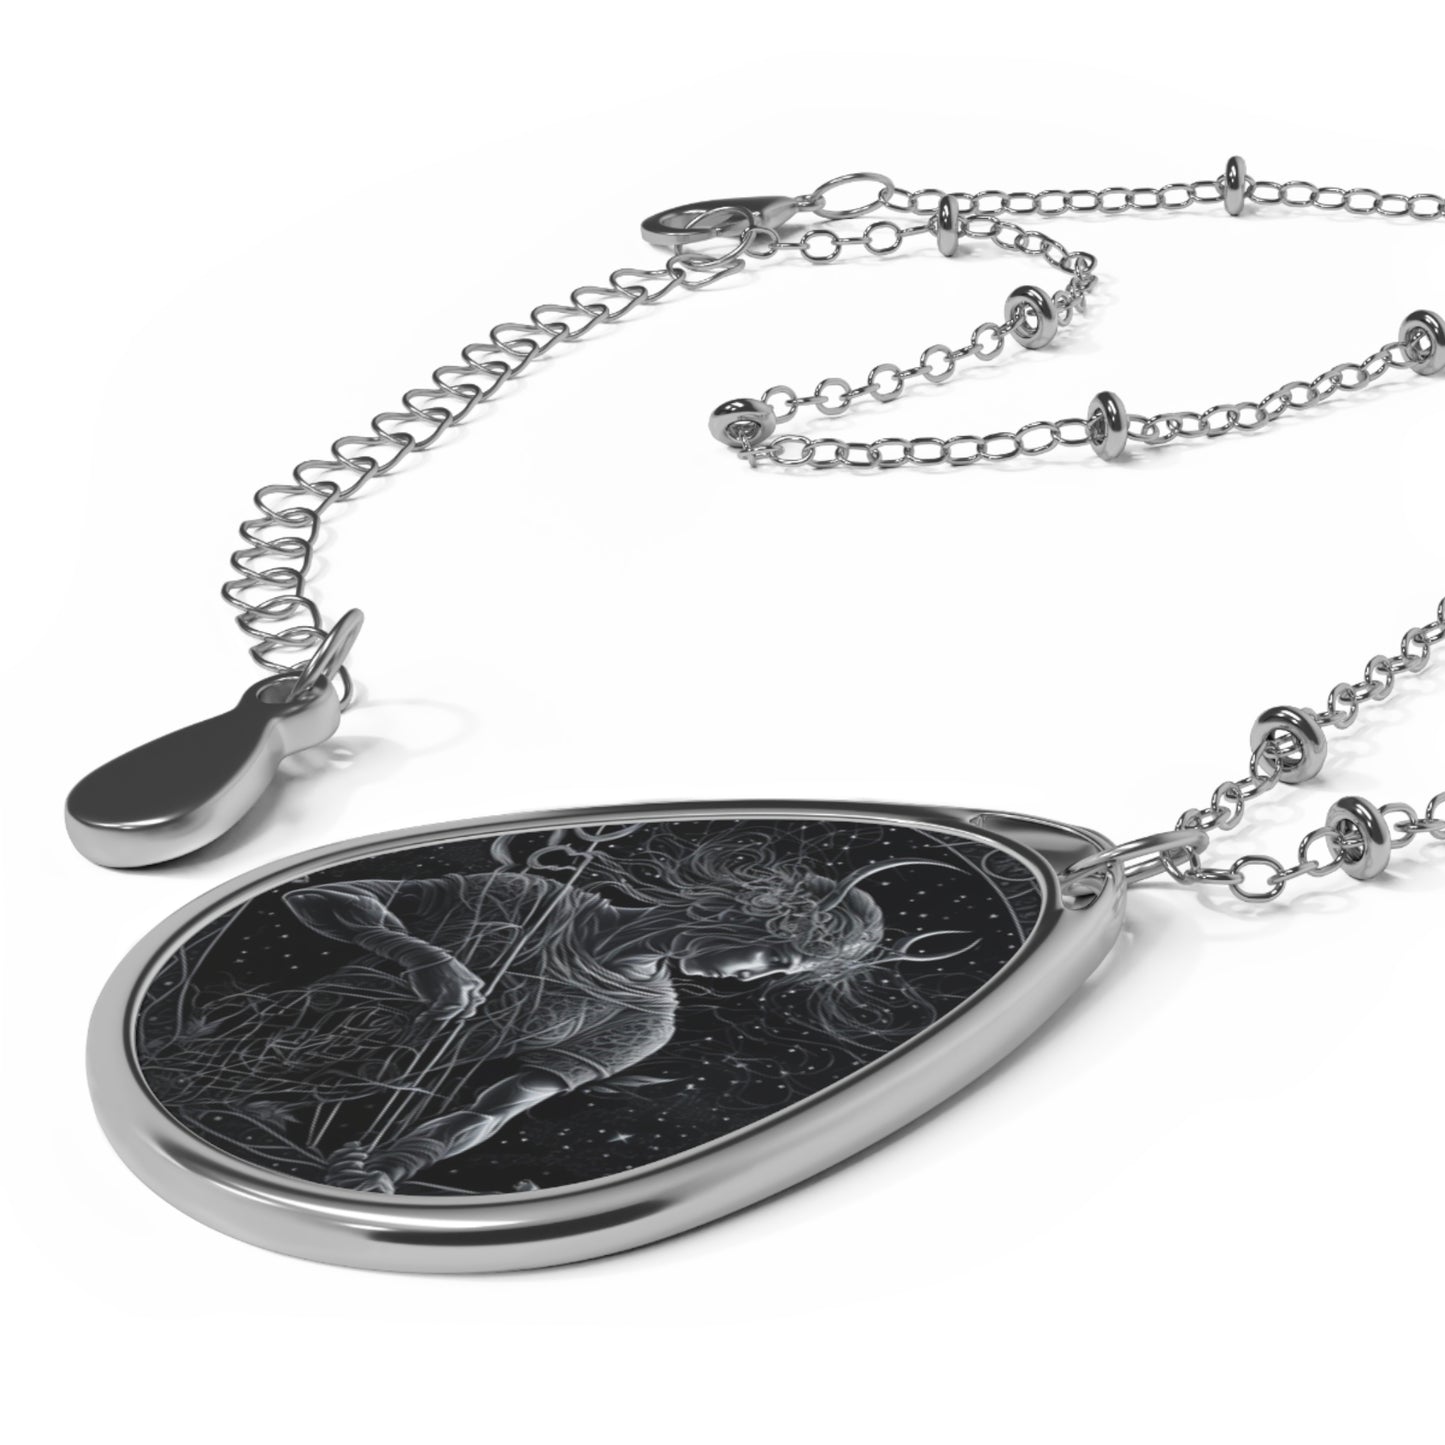 Sagittarius Zodiac Sign ~ Sagittarius Centaur in Black and White ~ Necklace & Oval Pendant With Chain